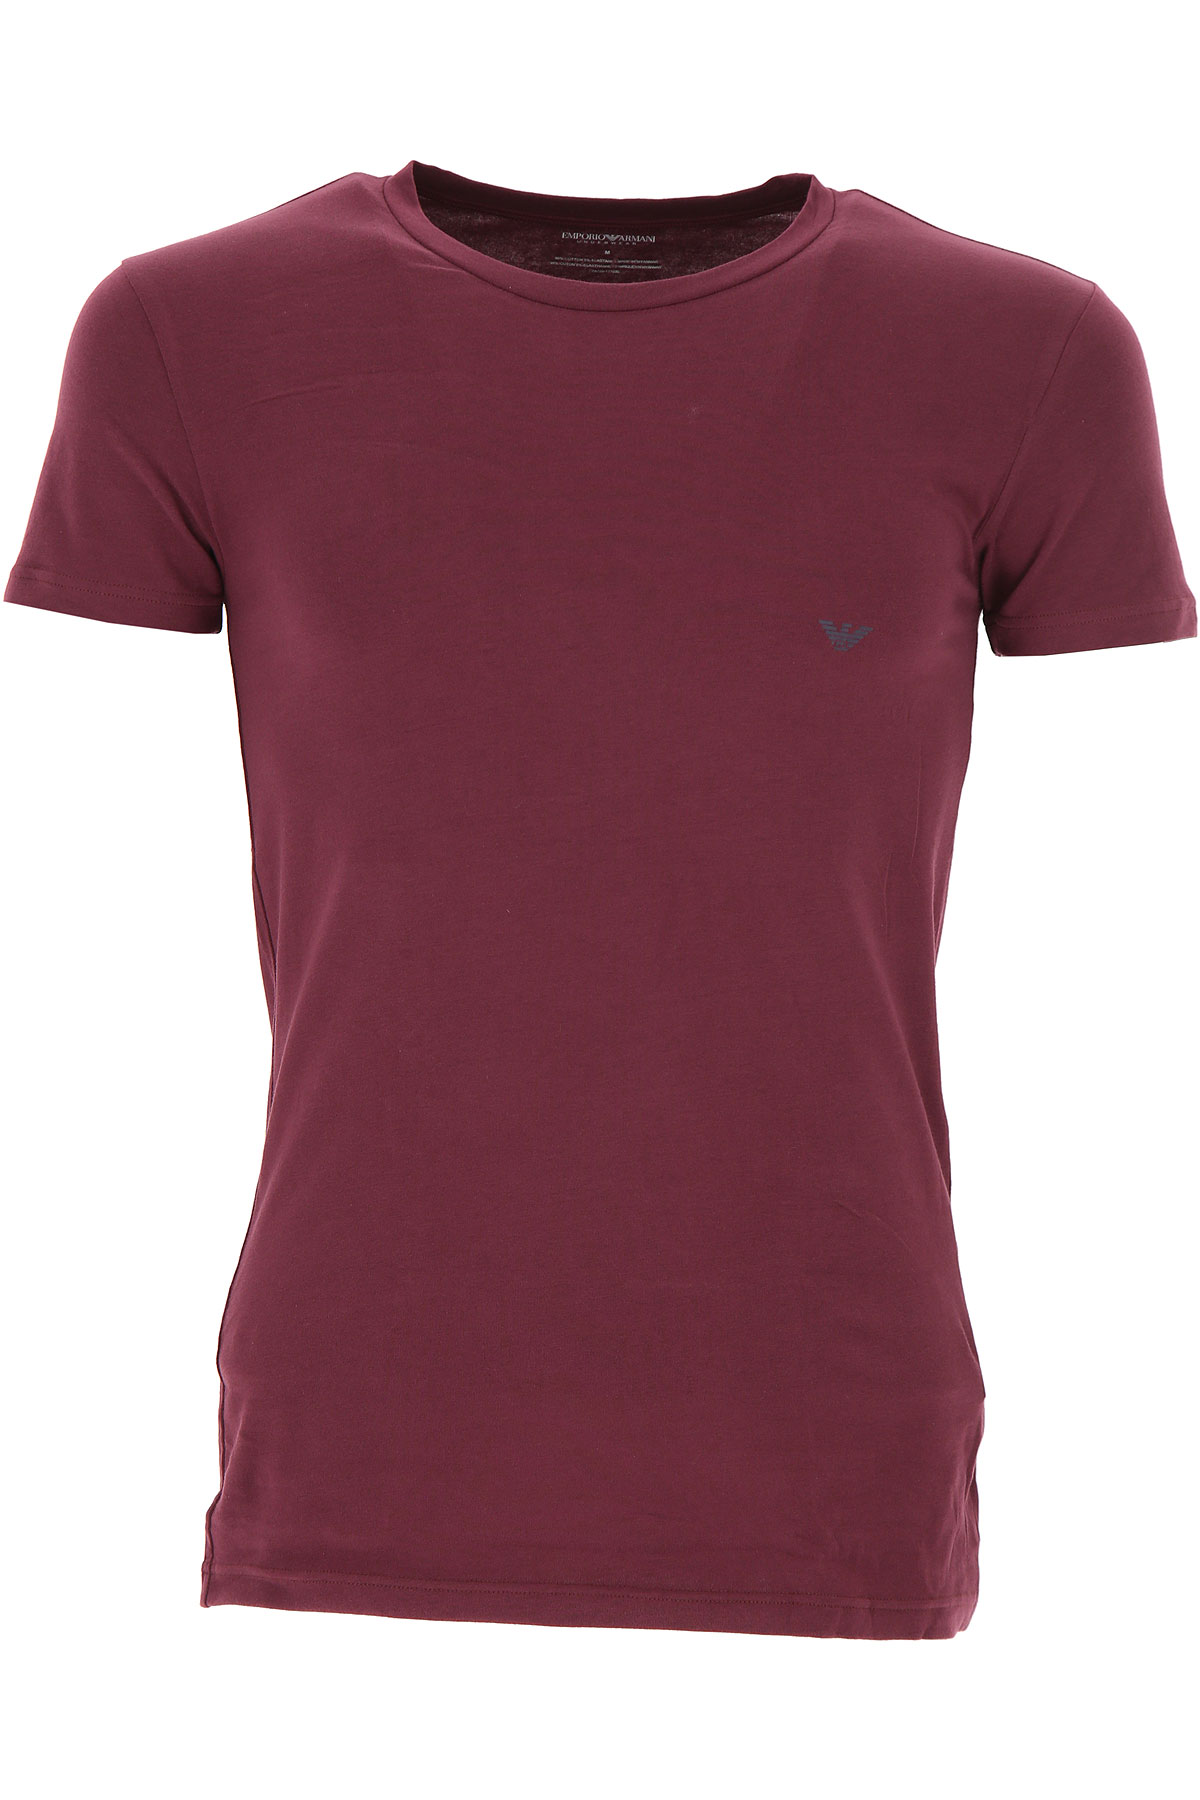 Emporio Armani T-shirt Homme , Aubergine, Coton, 2017, M S XL